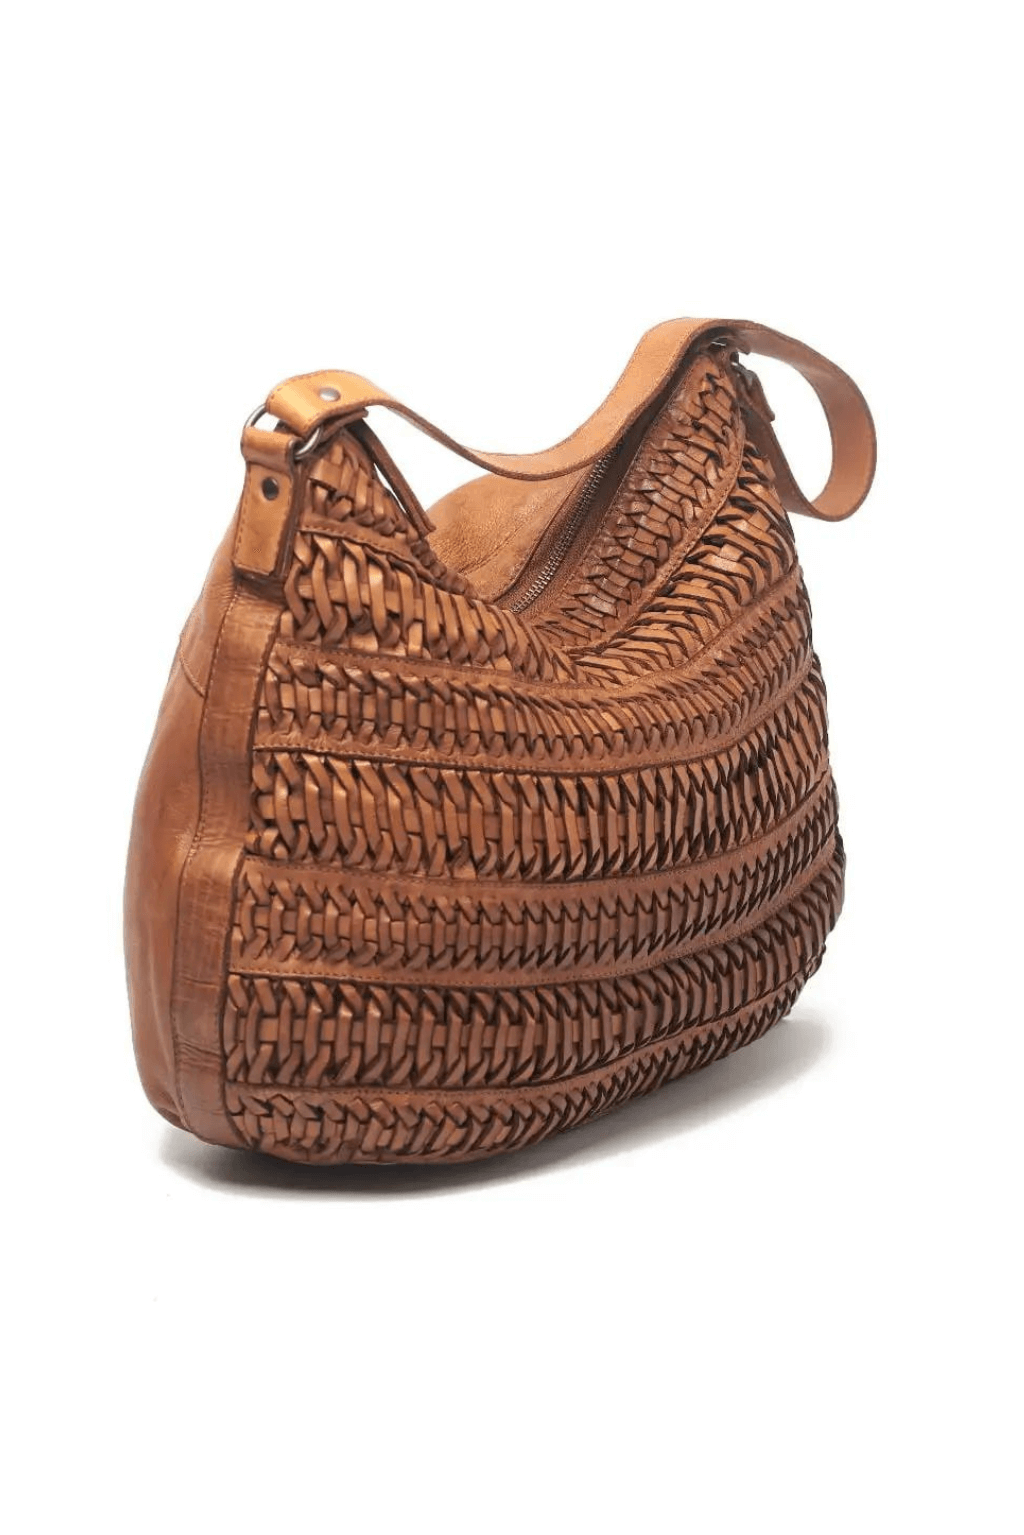 Eco-Leather Handbags Collection - FORZIERI